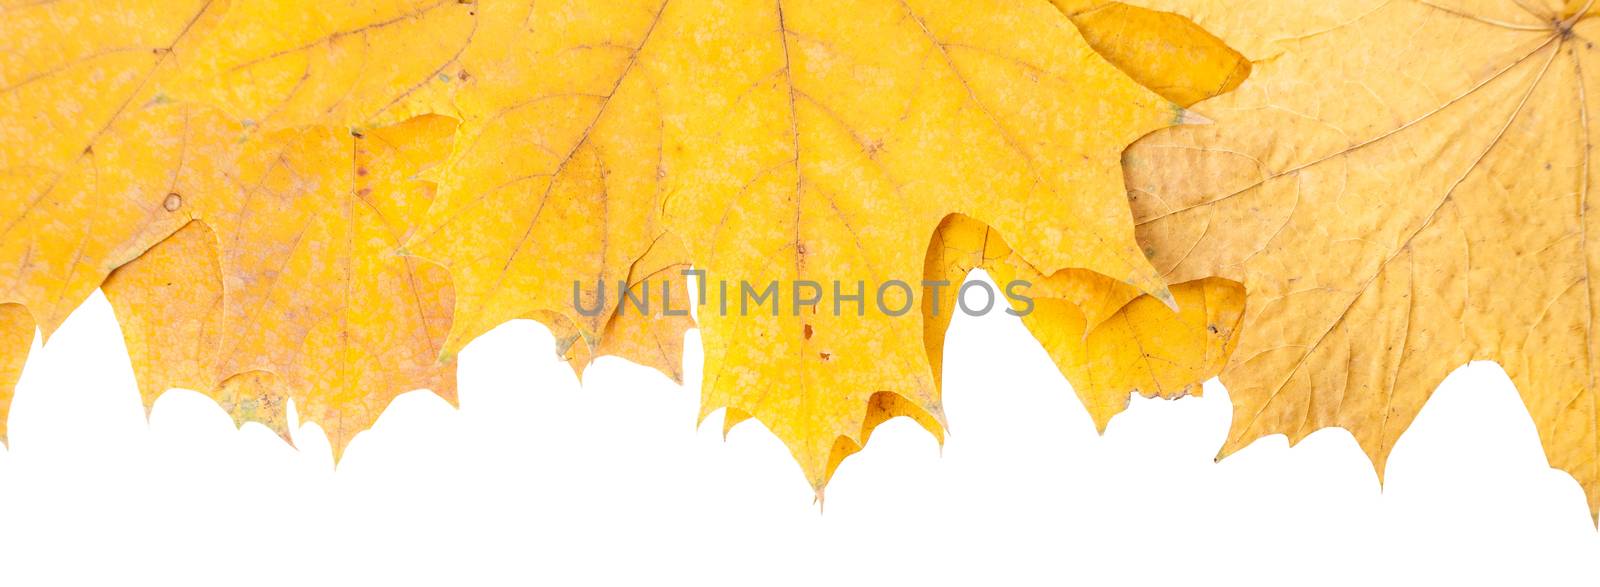 yellow, dry, fallen autumn maple leaves